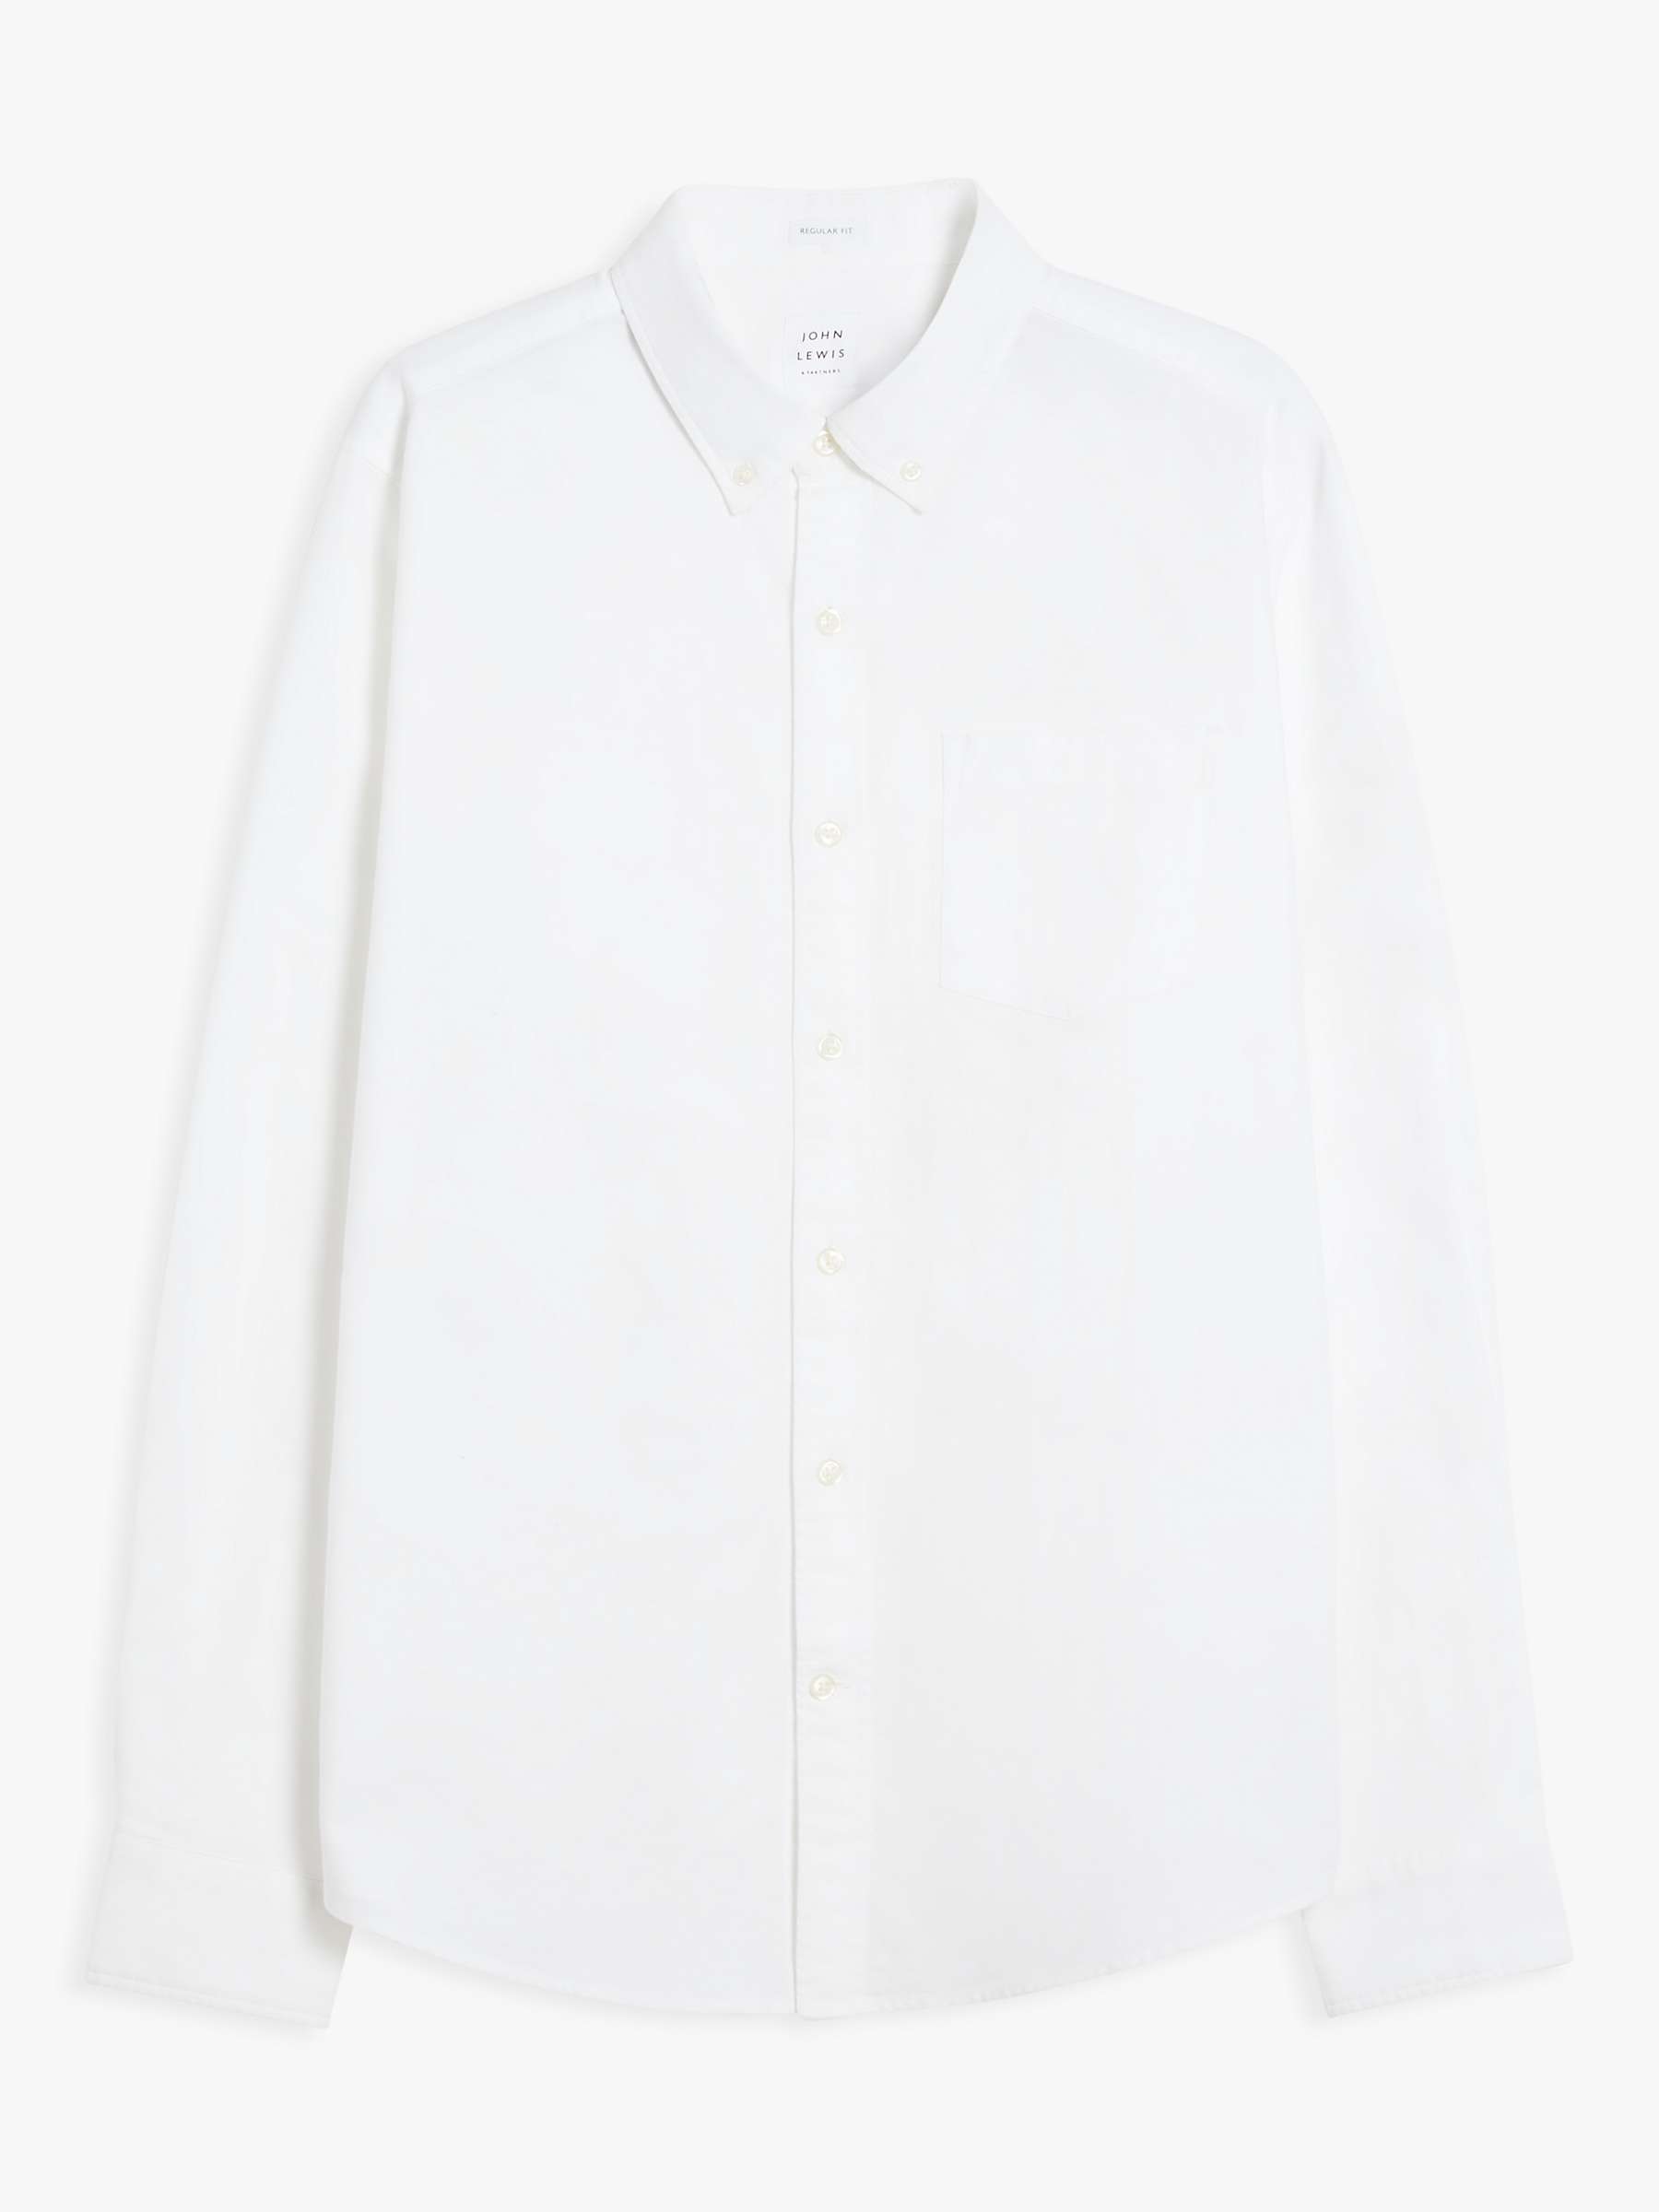 Buy John Lewis Slim Fit Cotton Oxford Button Down Shirt Online at johnlewis.com